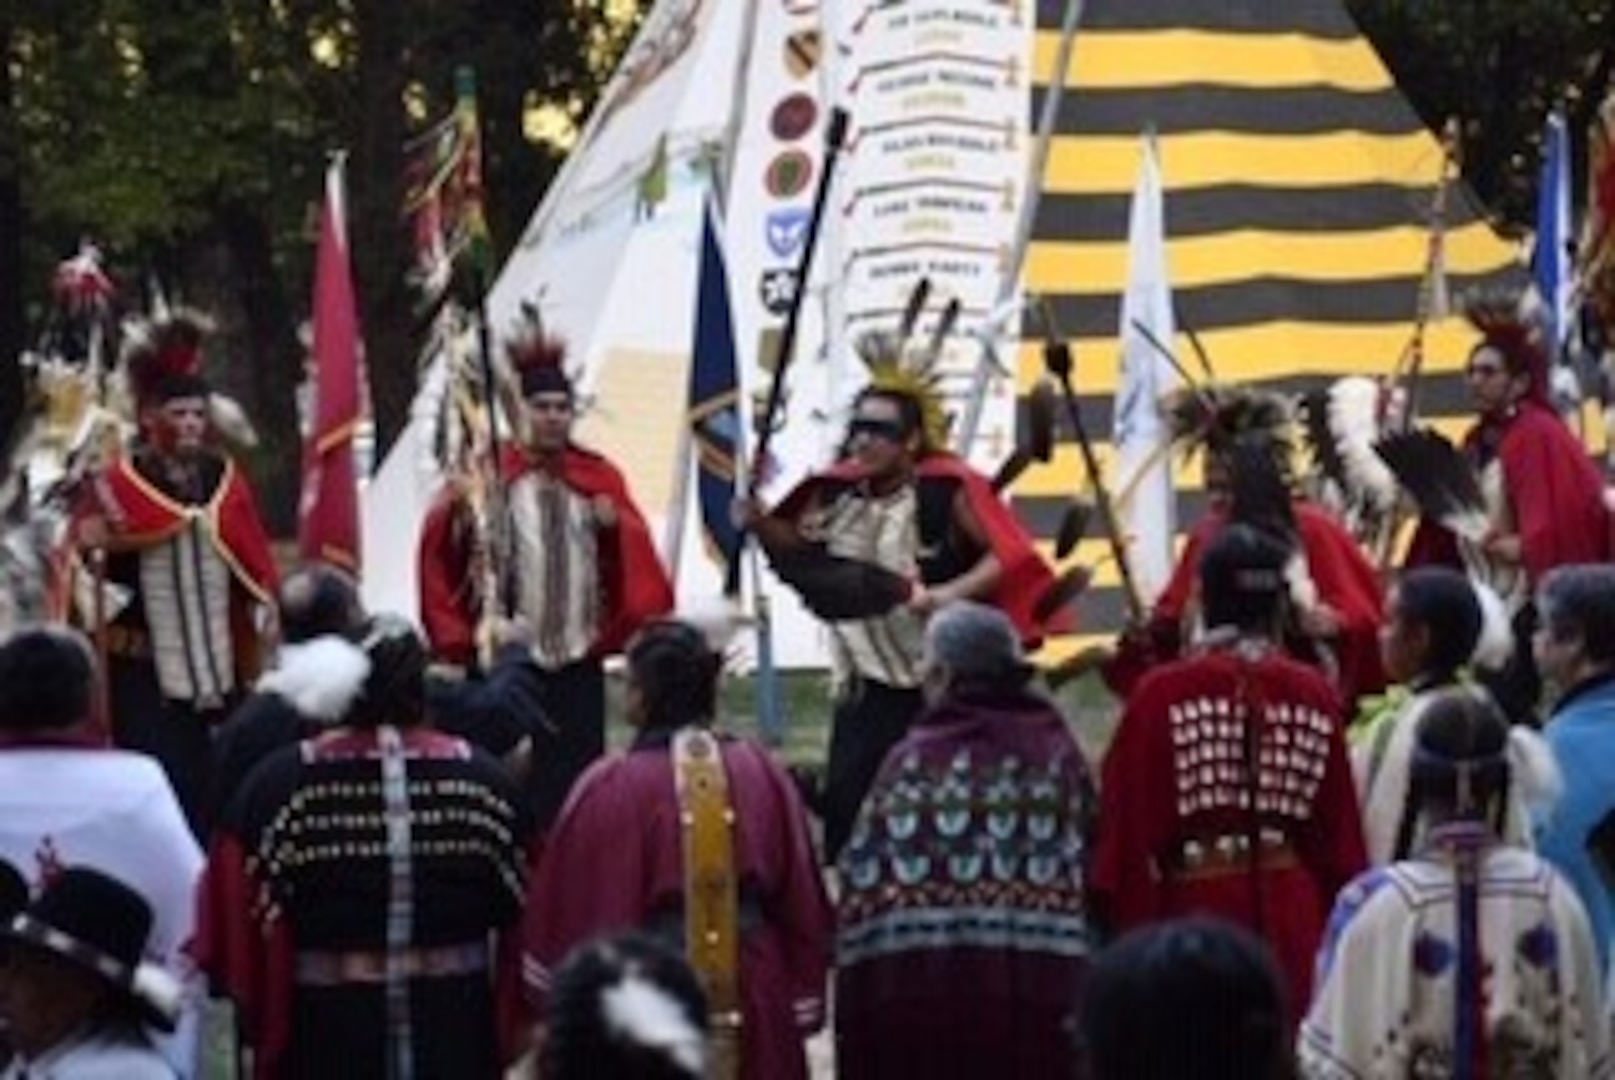 Dancers performing as part of the Kiowa Black Leggings Warrior Society